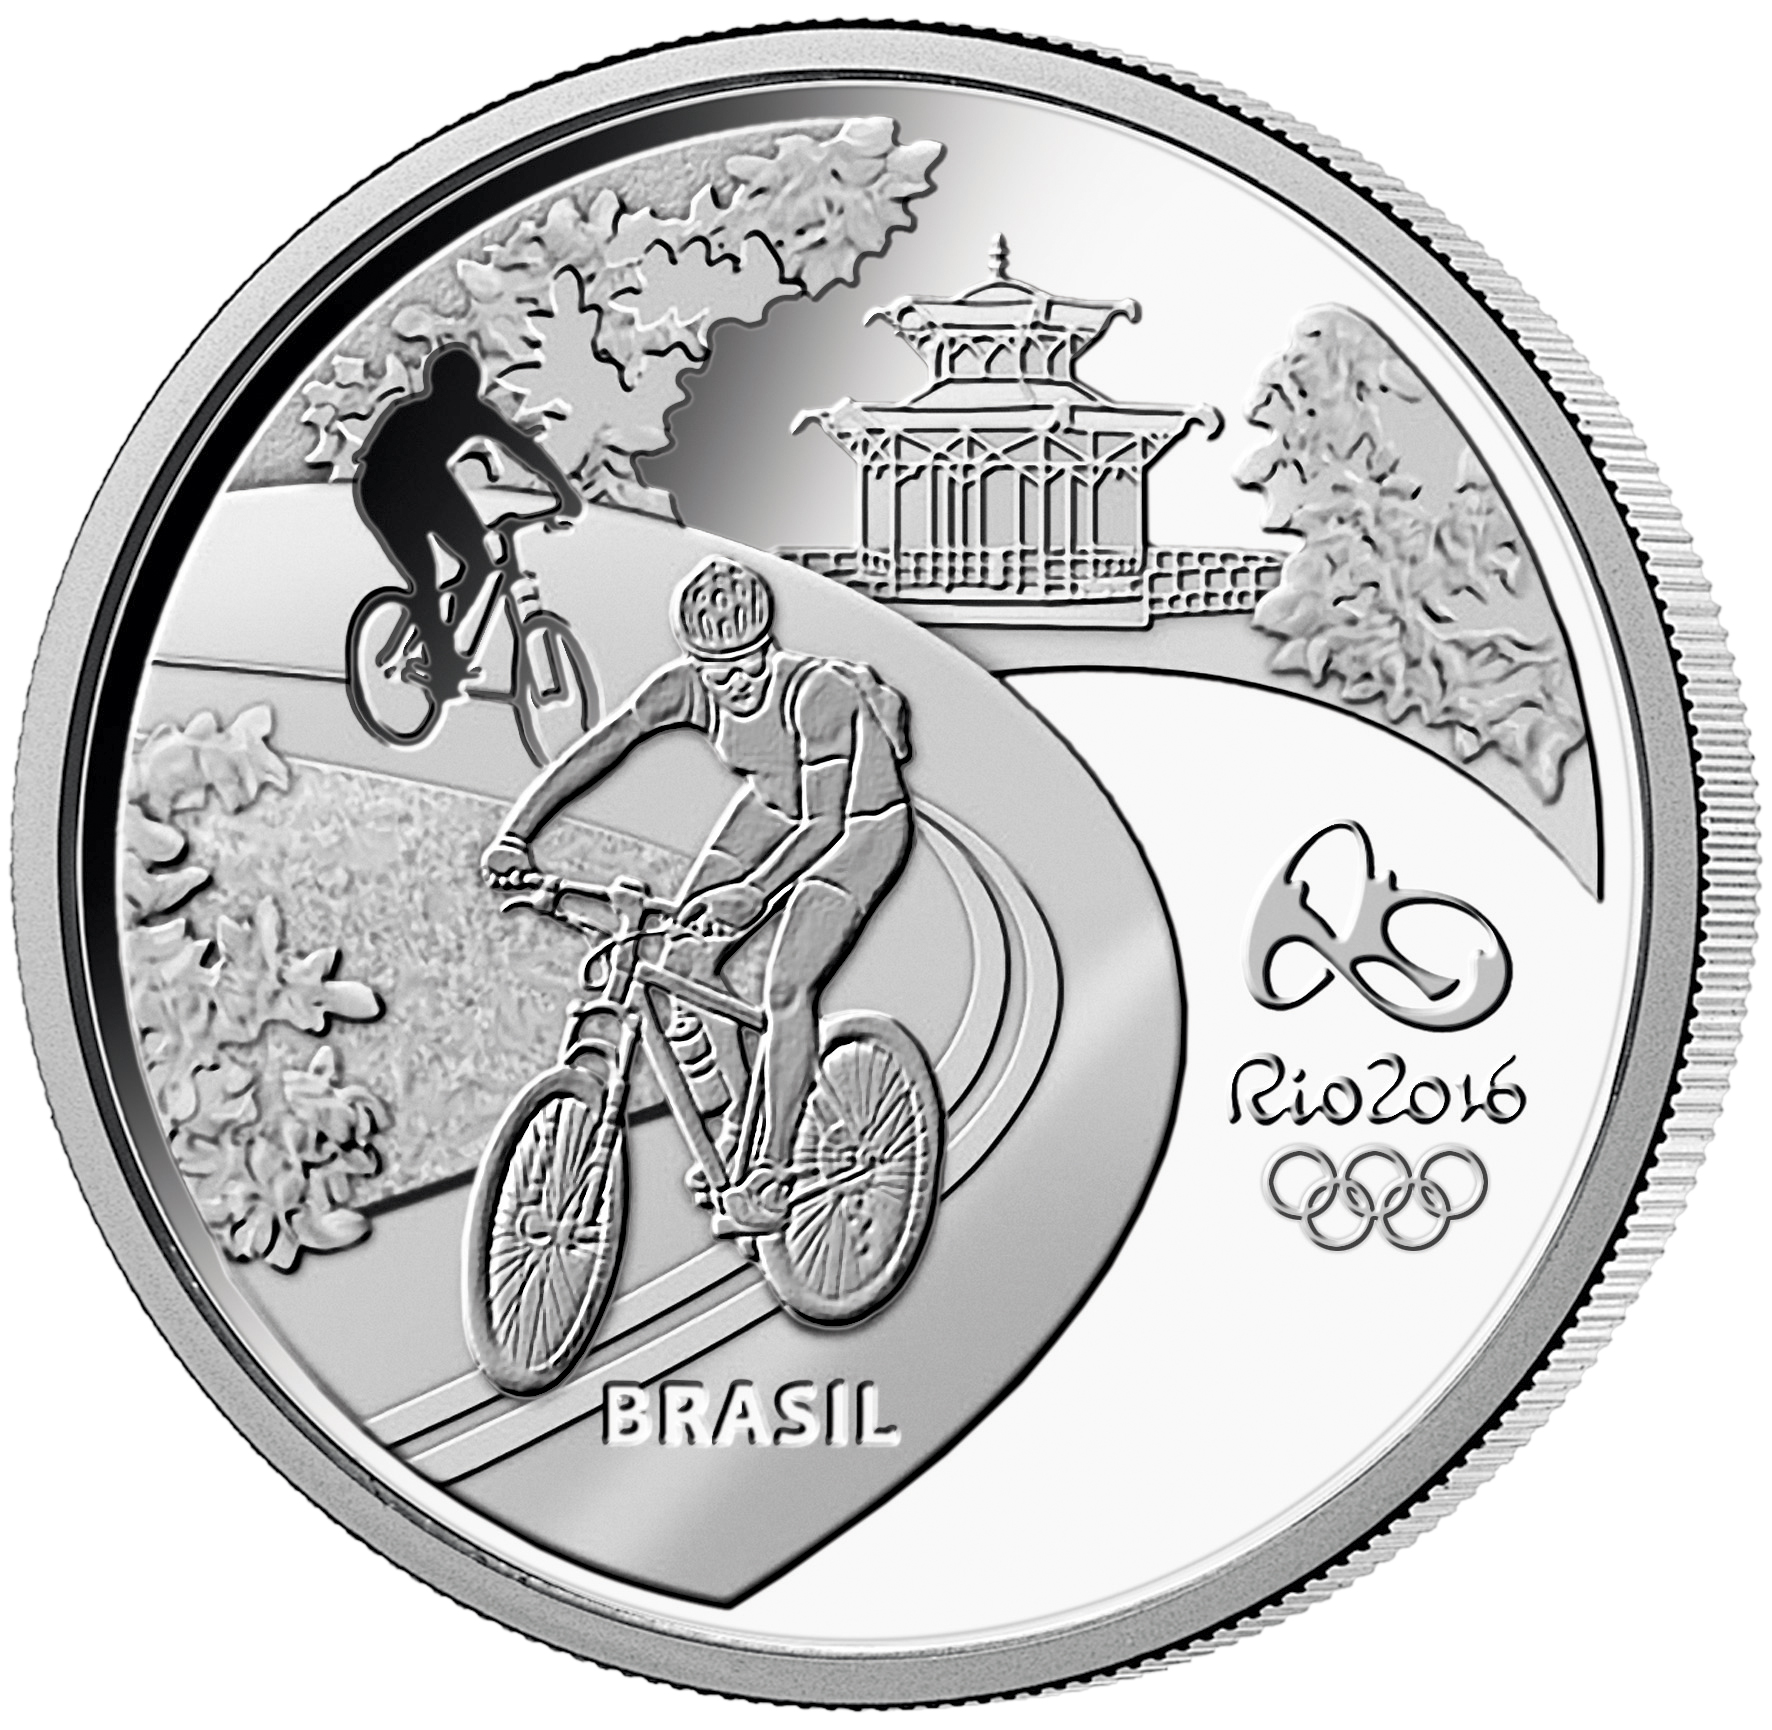 Rio 2016 moneta